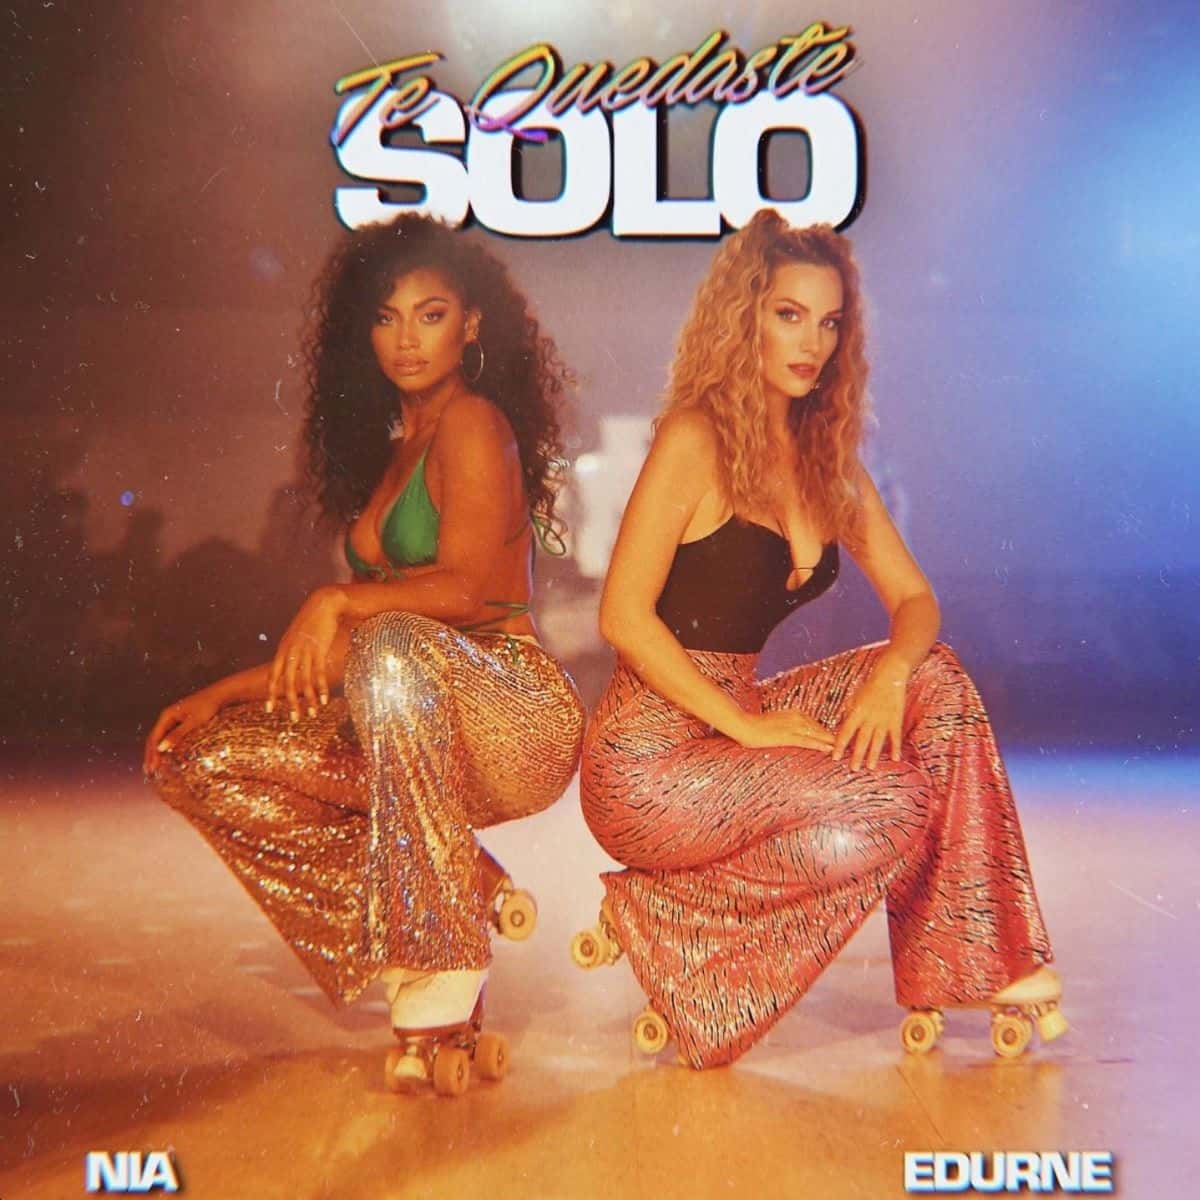 Edurne & NIA “Te Quedaste Solo” - hier im Bild das Cover der Single